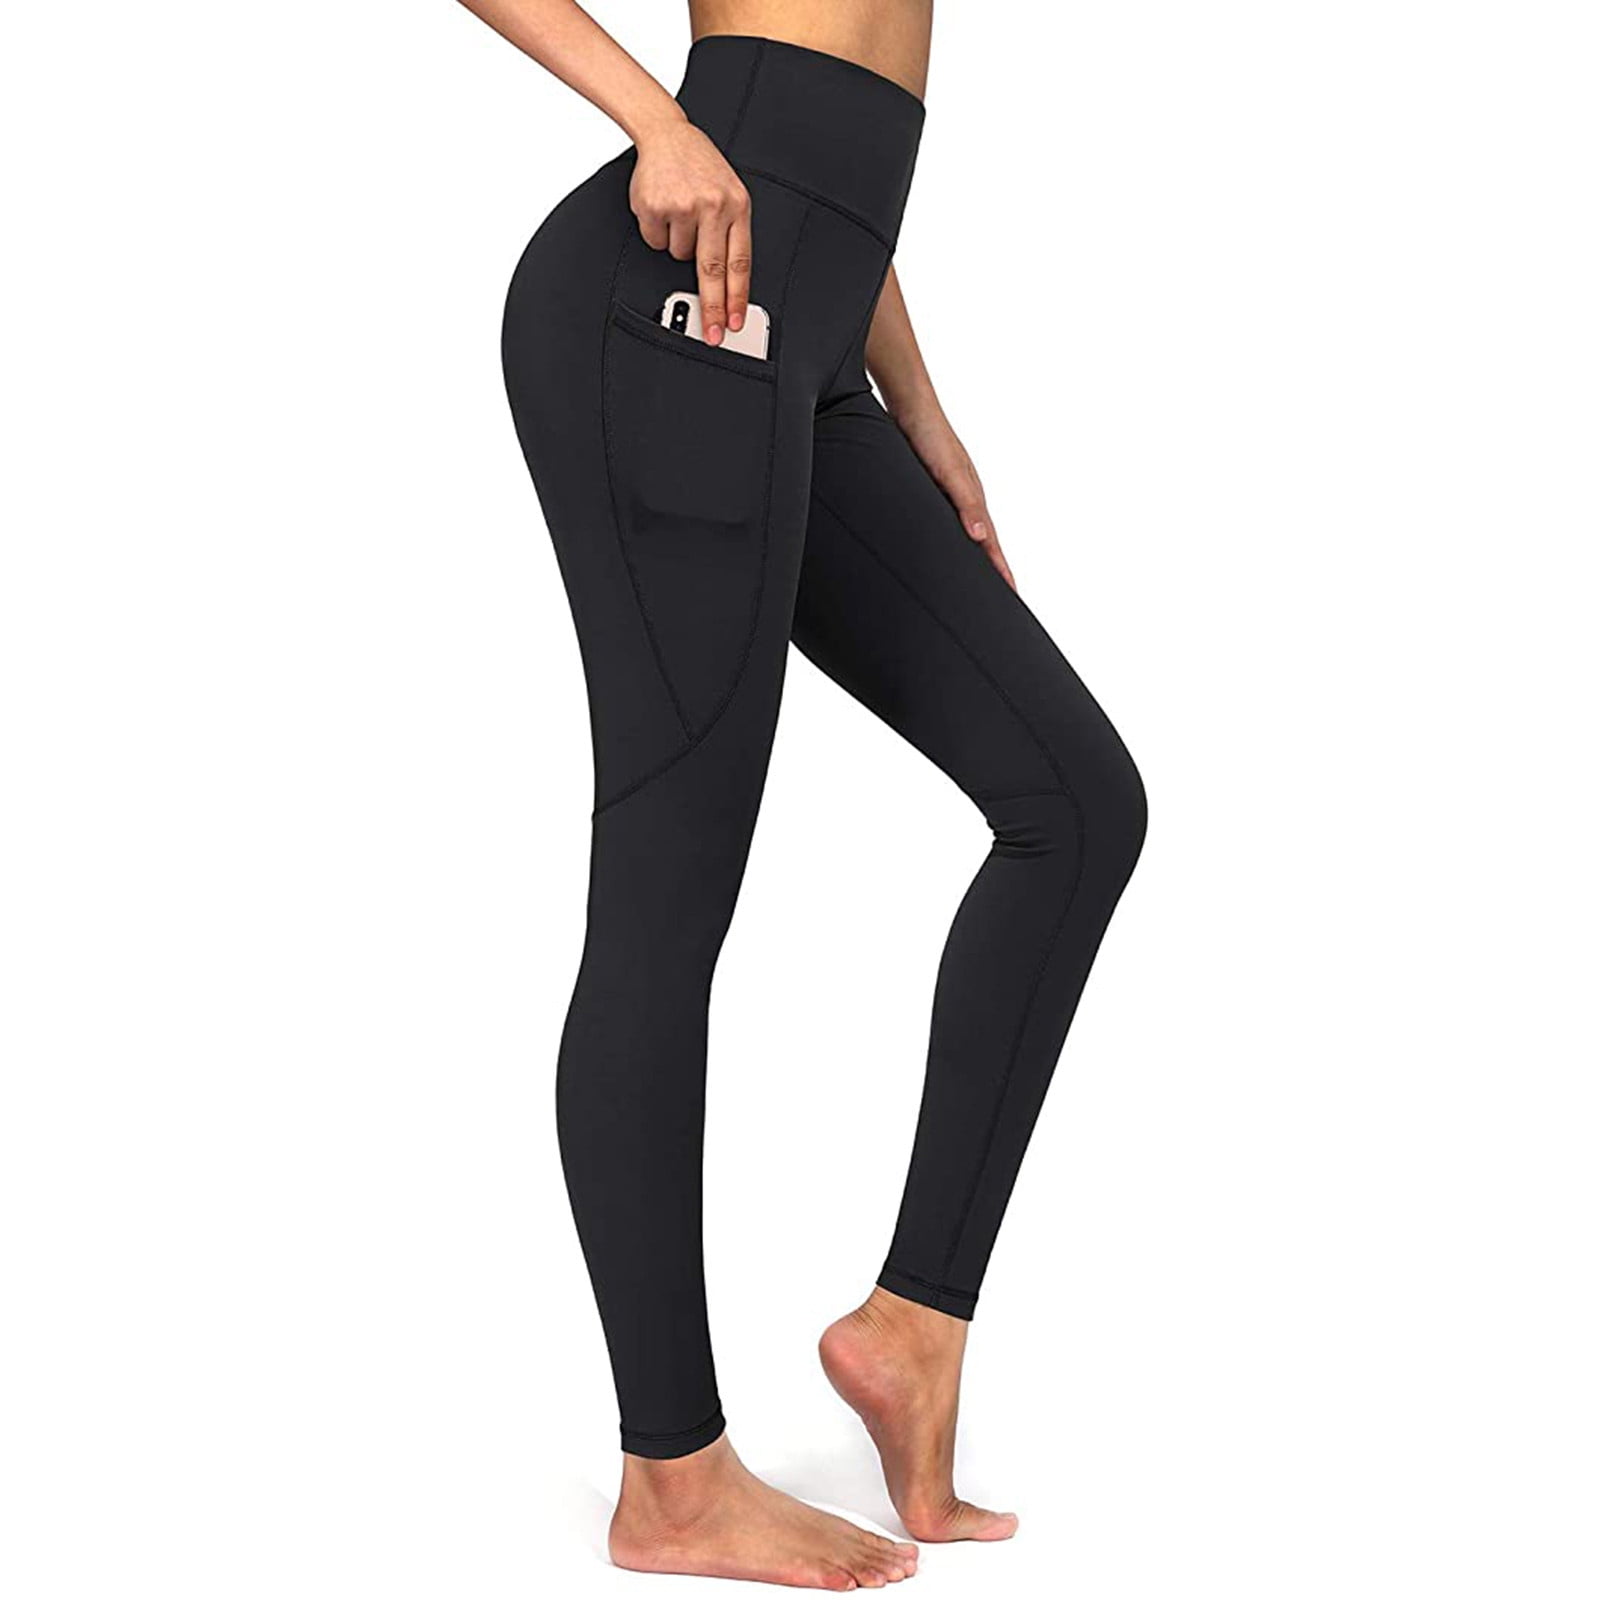 Aayomet Yoga Pants For Women Bootcut Women's Bootcut Yoga Pants with Pockets,  High Waist Workout Bootleg Yoga Pants Tummy Control 6 Way Stretch Pants,Black  M 